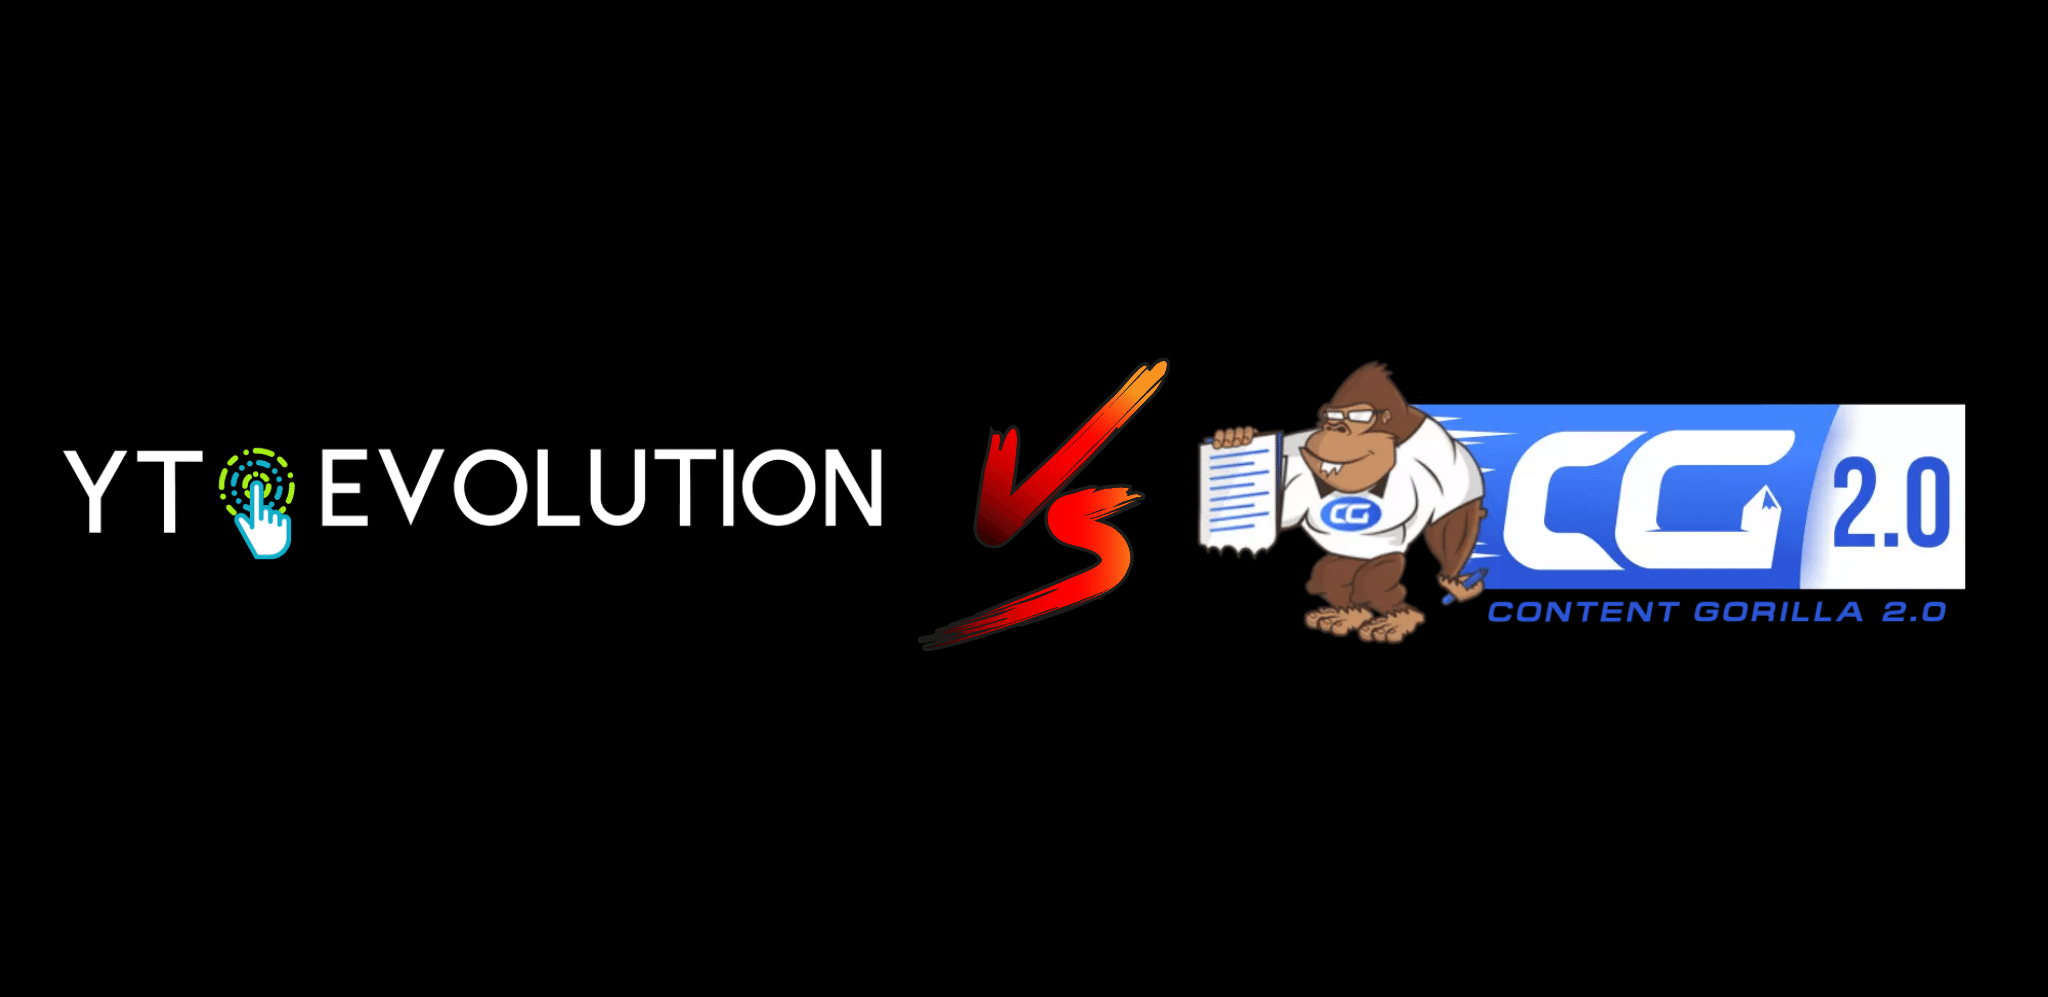 YT Evolution VS Content Gorilla